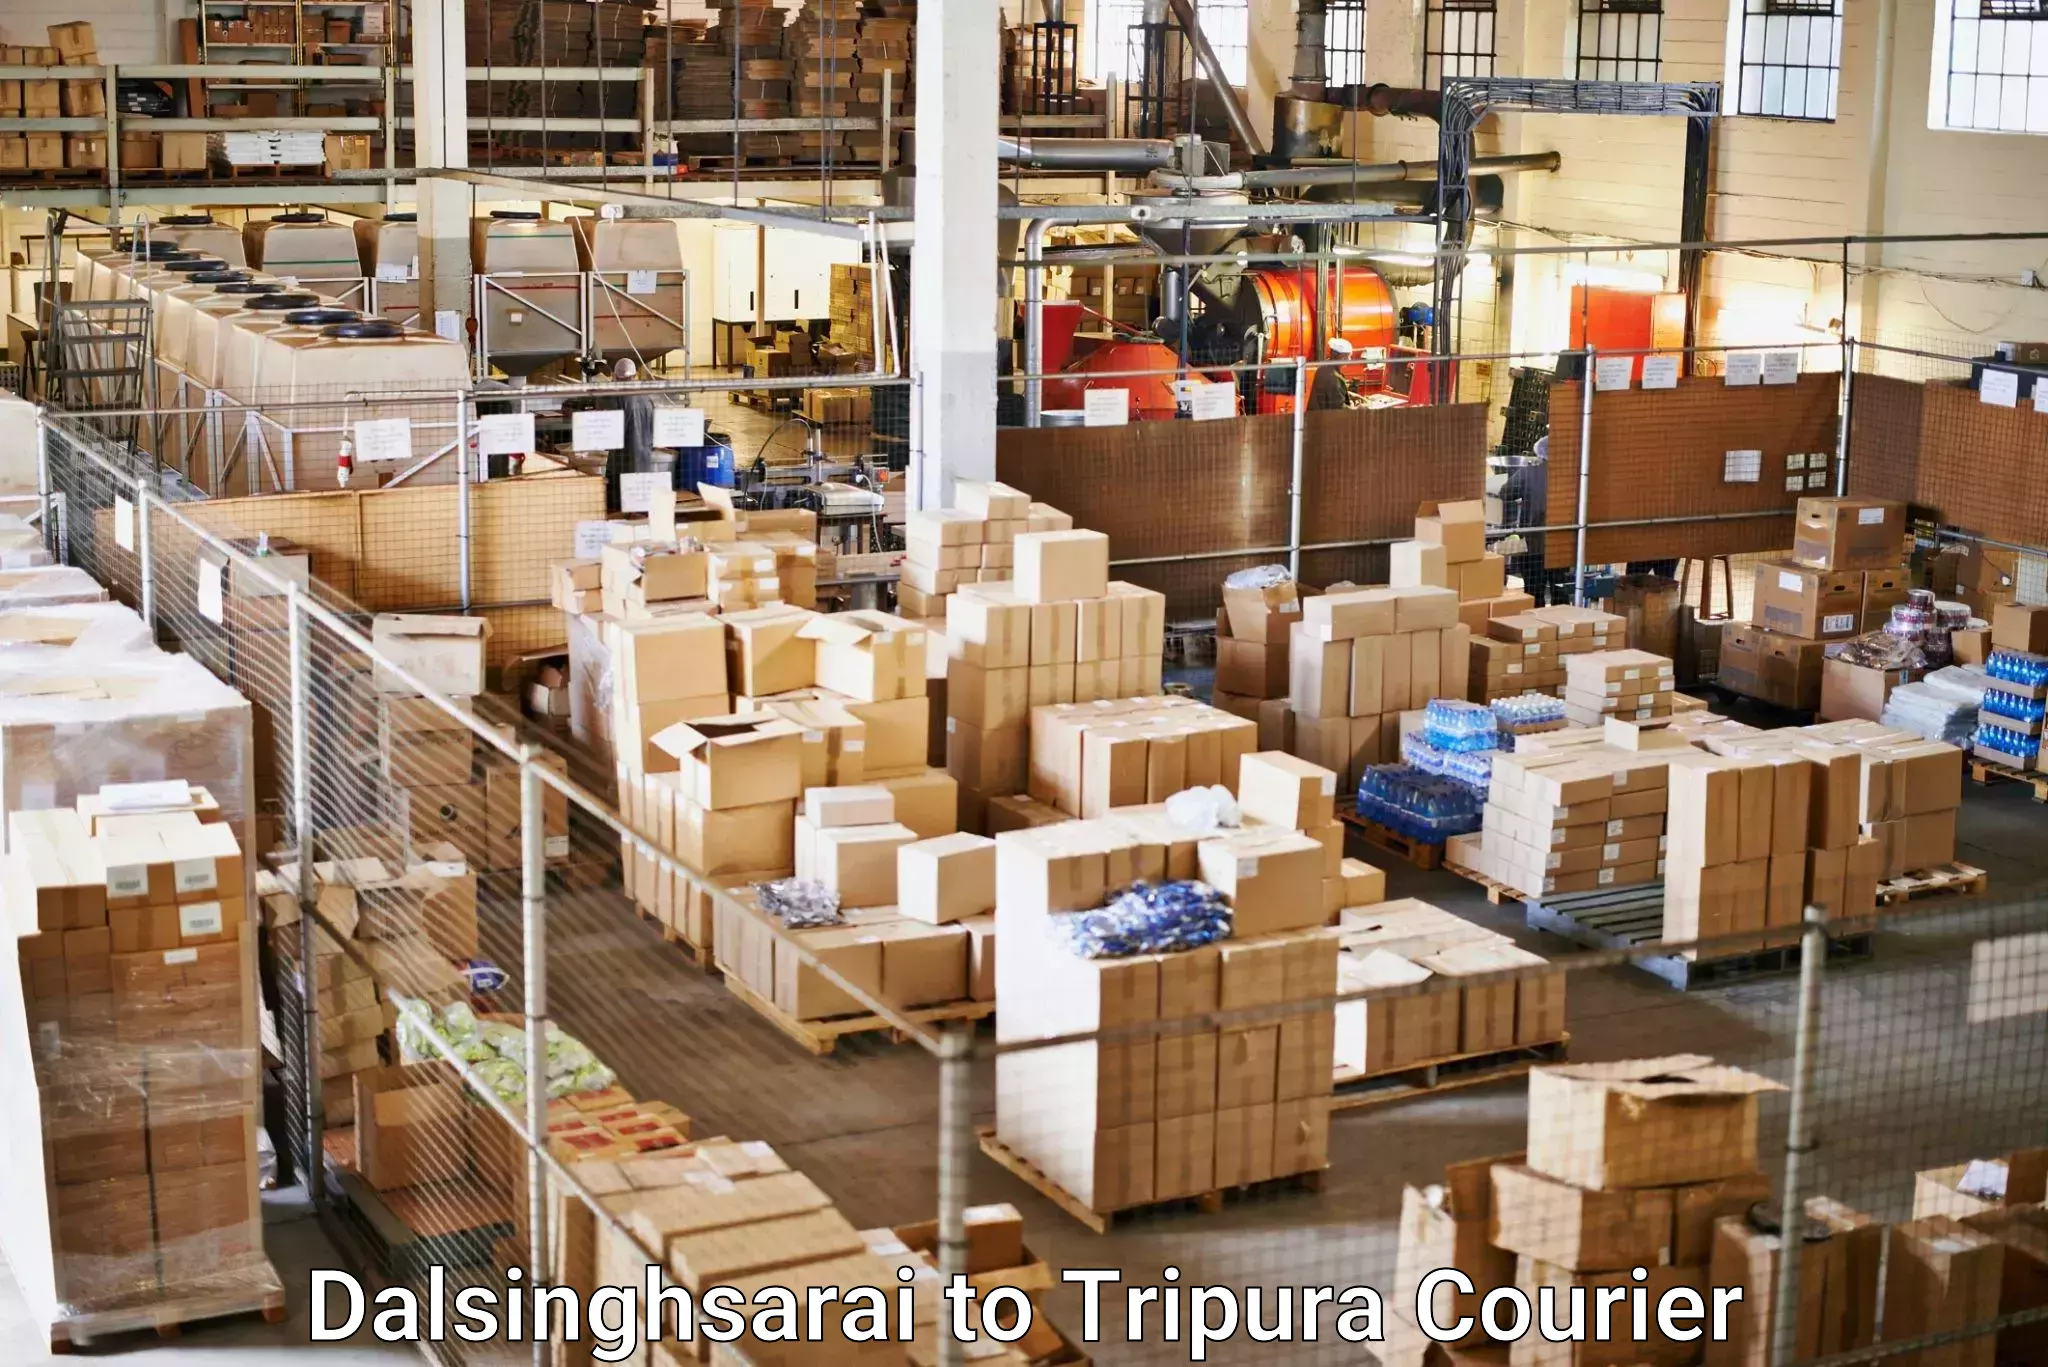 Optimized shipping services Dalsinghsarai to Udaipur Tripura